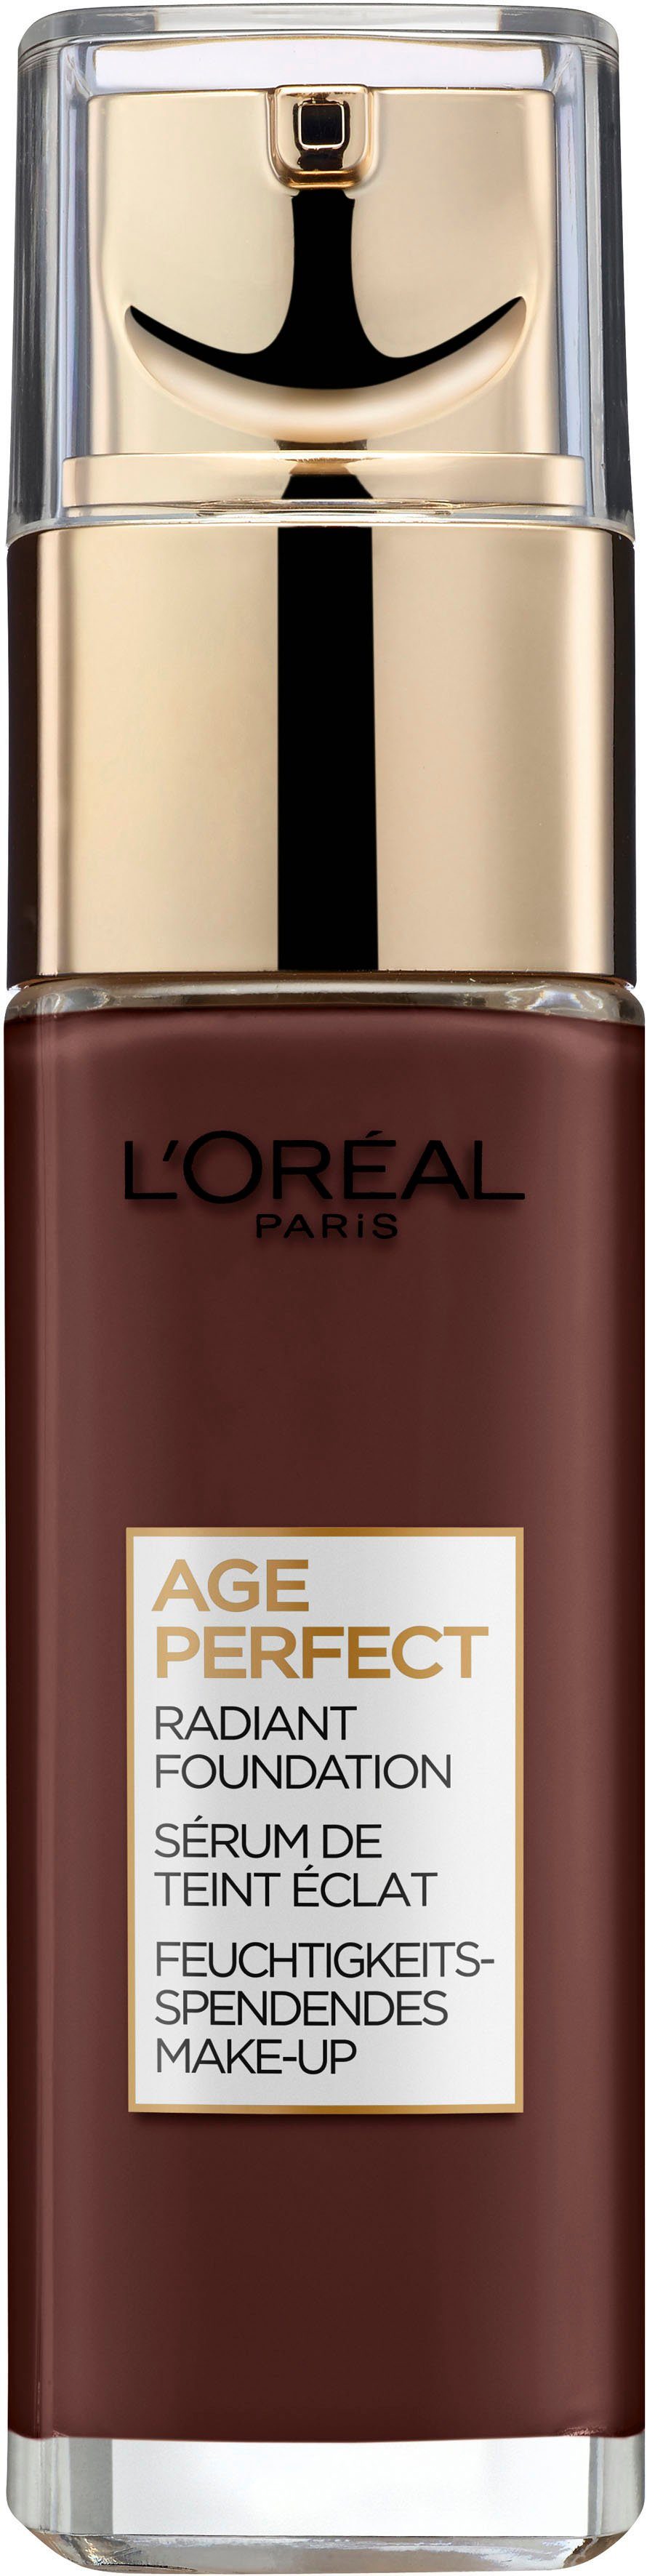 PARIS feuchtigkeitsspendend L'ORÉAL 530 Perfect, Espresso Age Foundation